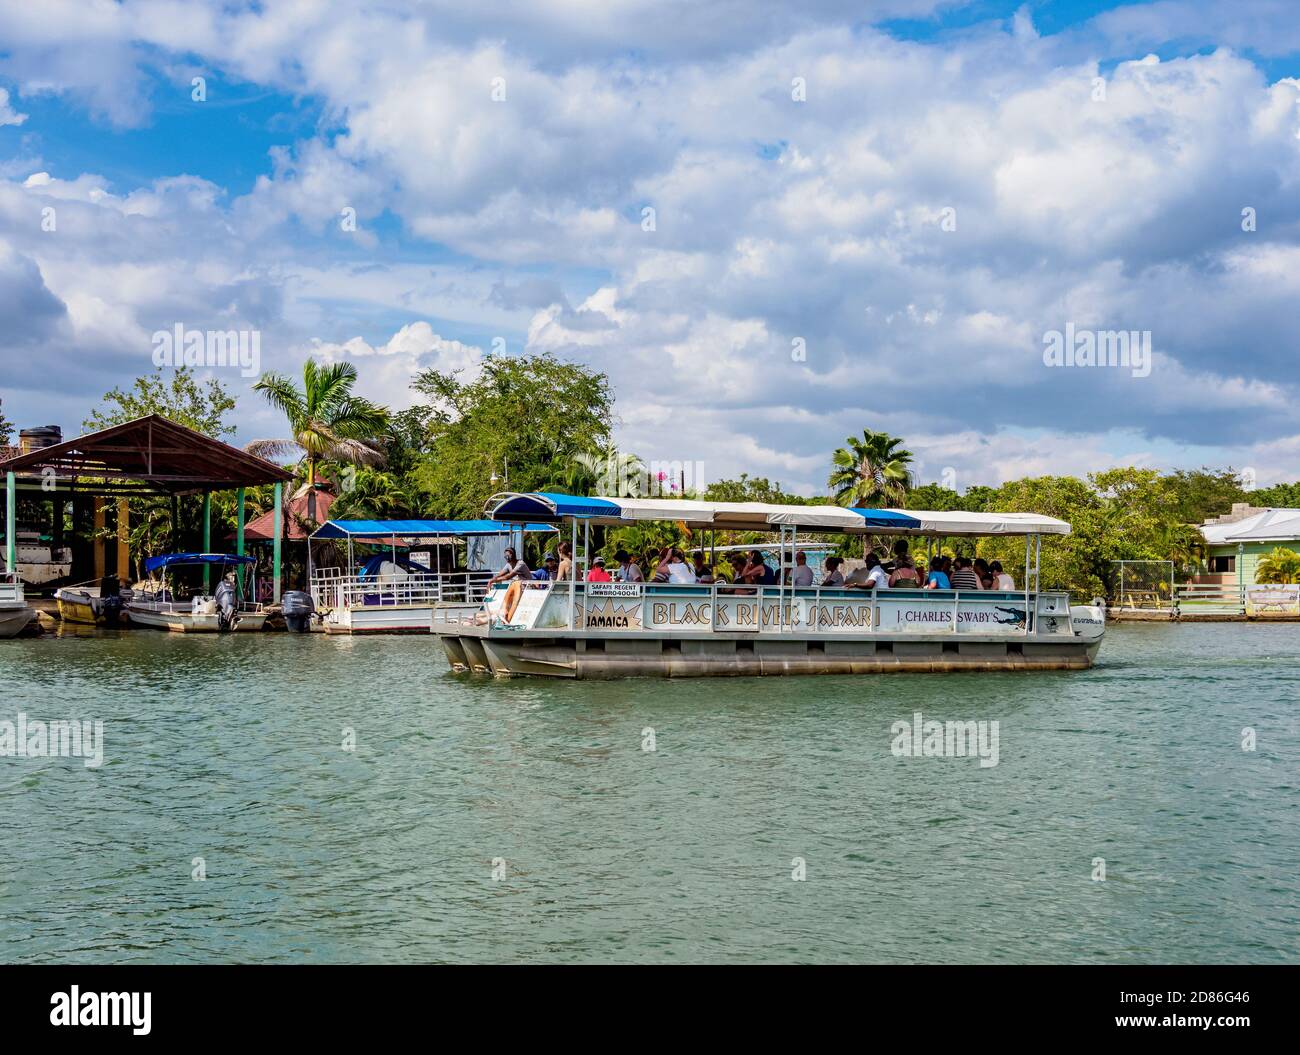 Safari por el Río Negro en barco, Parroquia de Santa Isabel, Jamaica Foto de stock